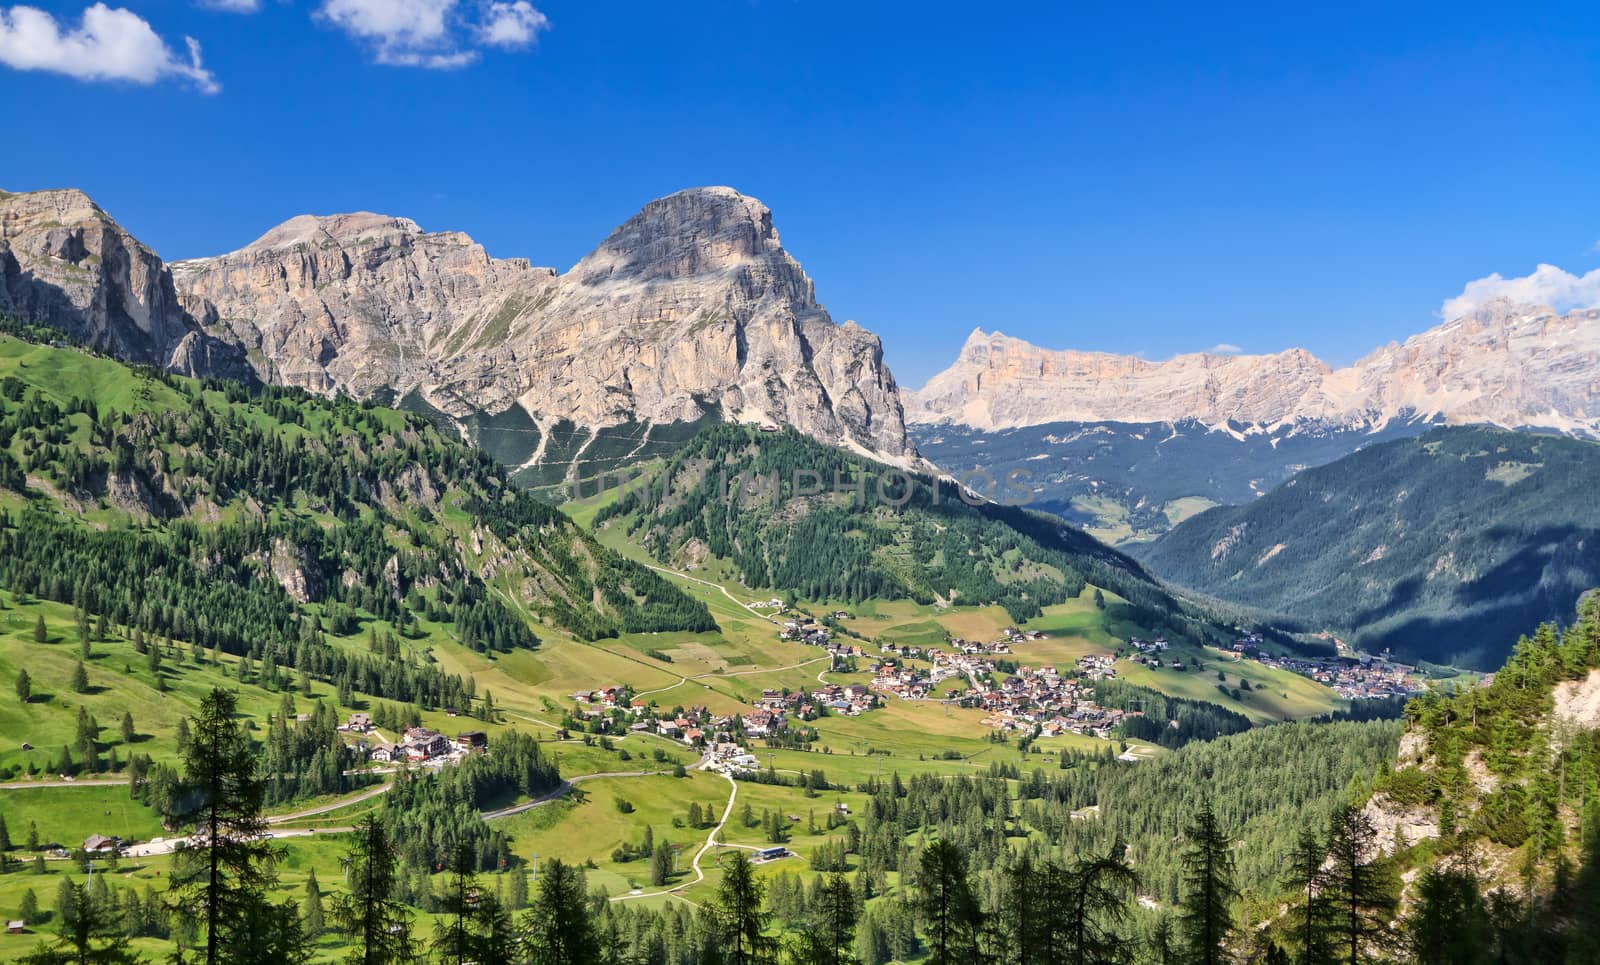 Panorama of Dolomiti Mountains and Badia Valley, Trentino Alto Adige, Italy